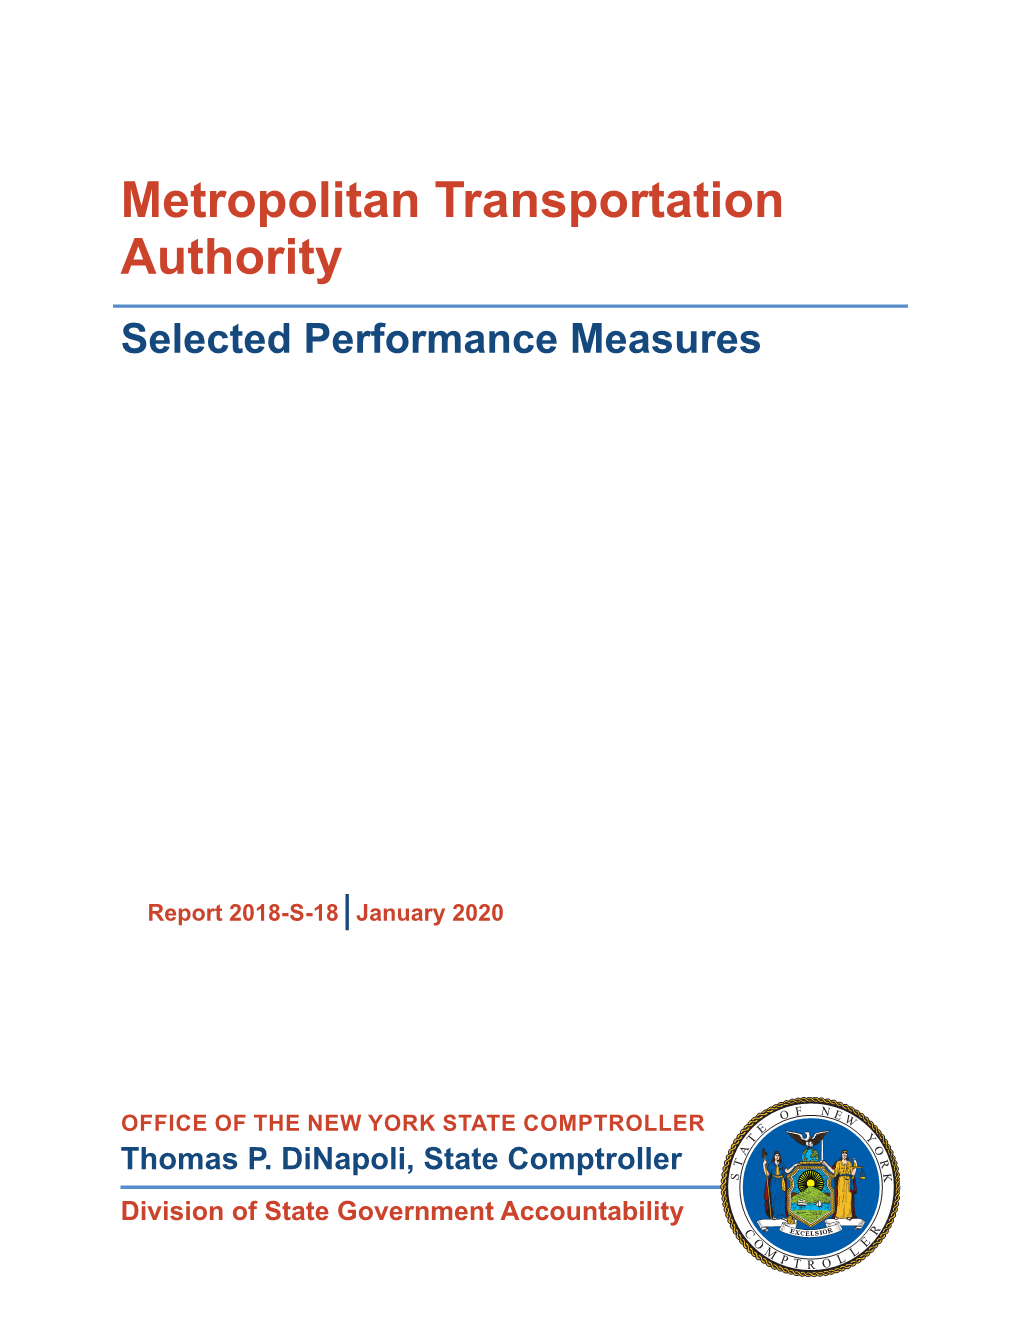 Metropolitan Transportation Authority: Selected Performance Measures